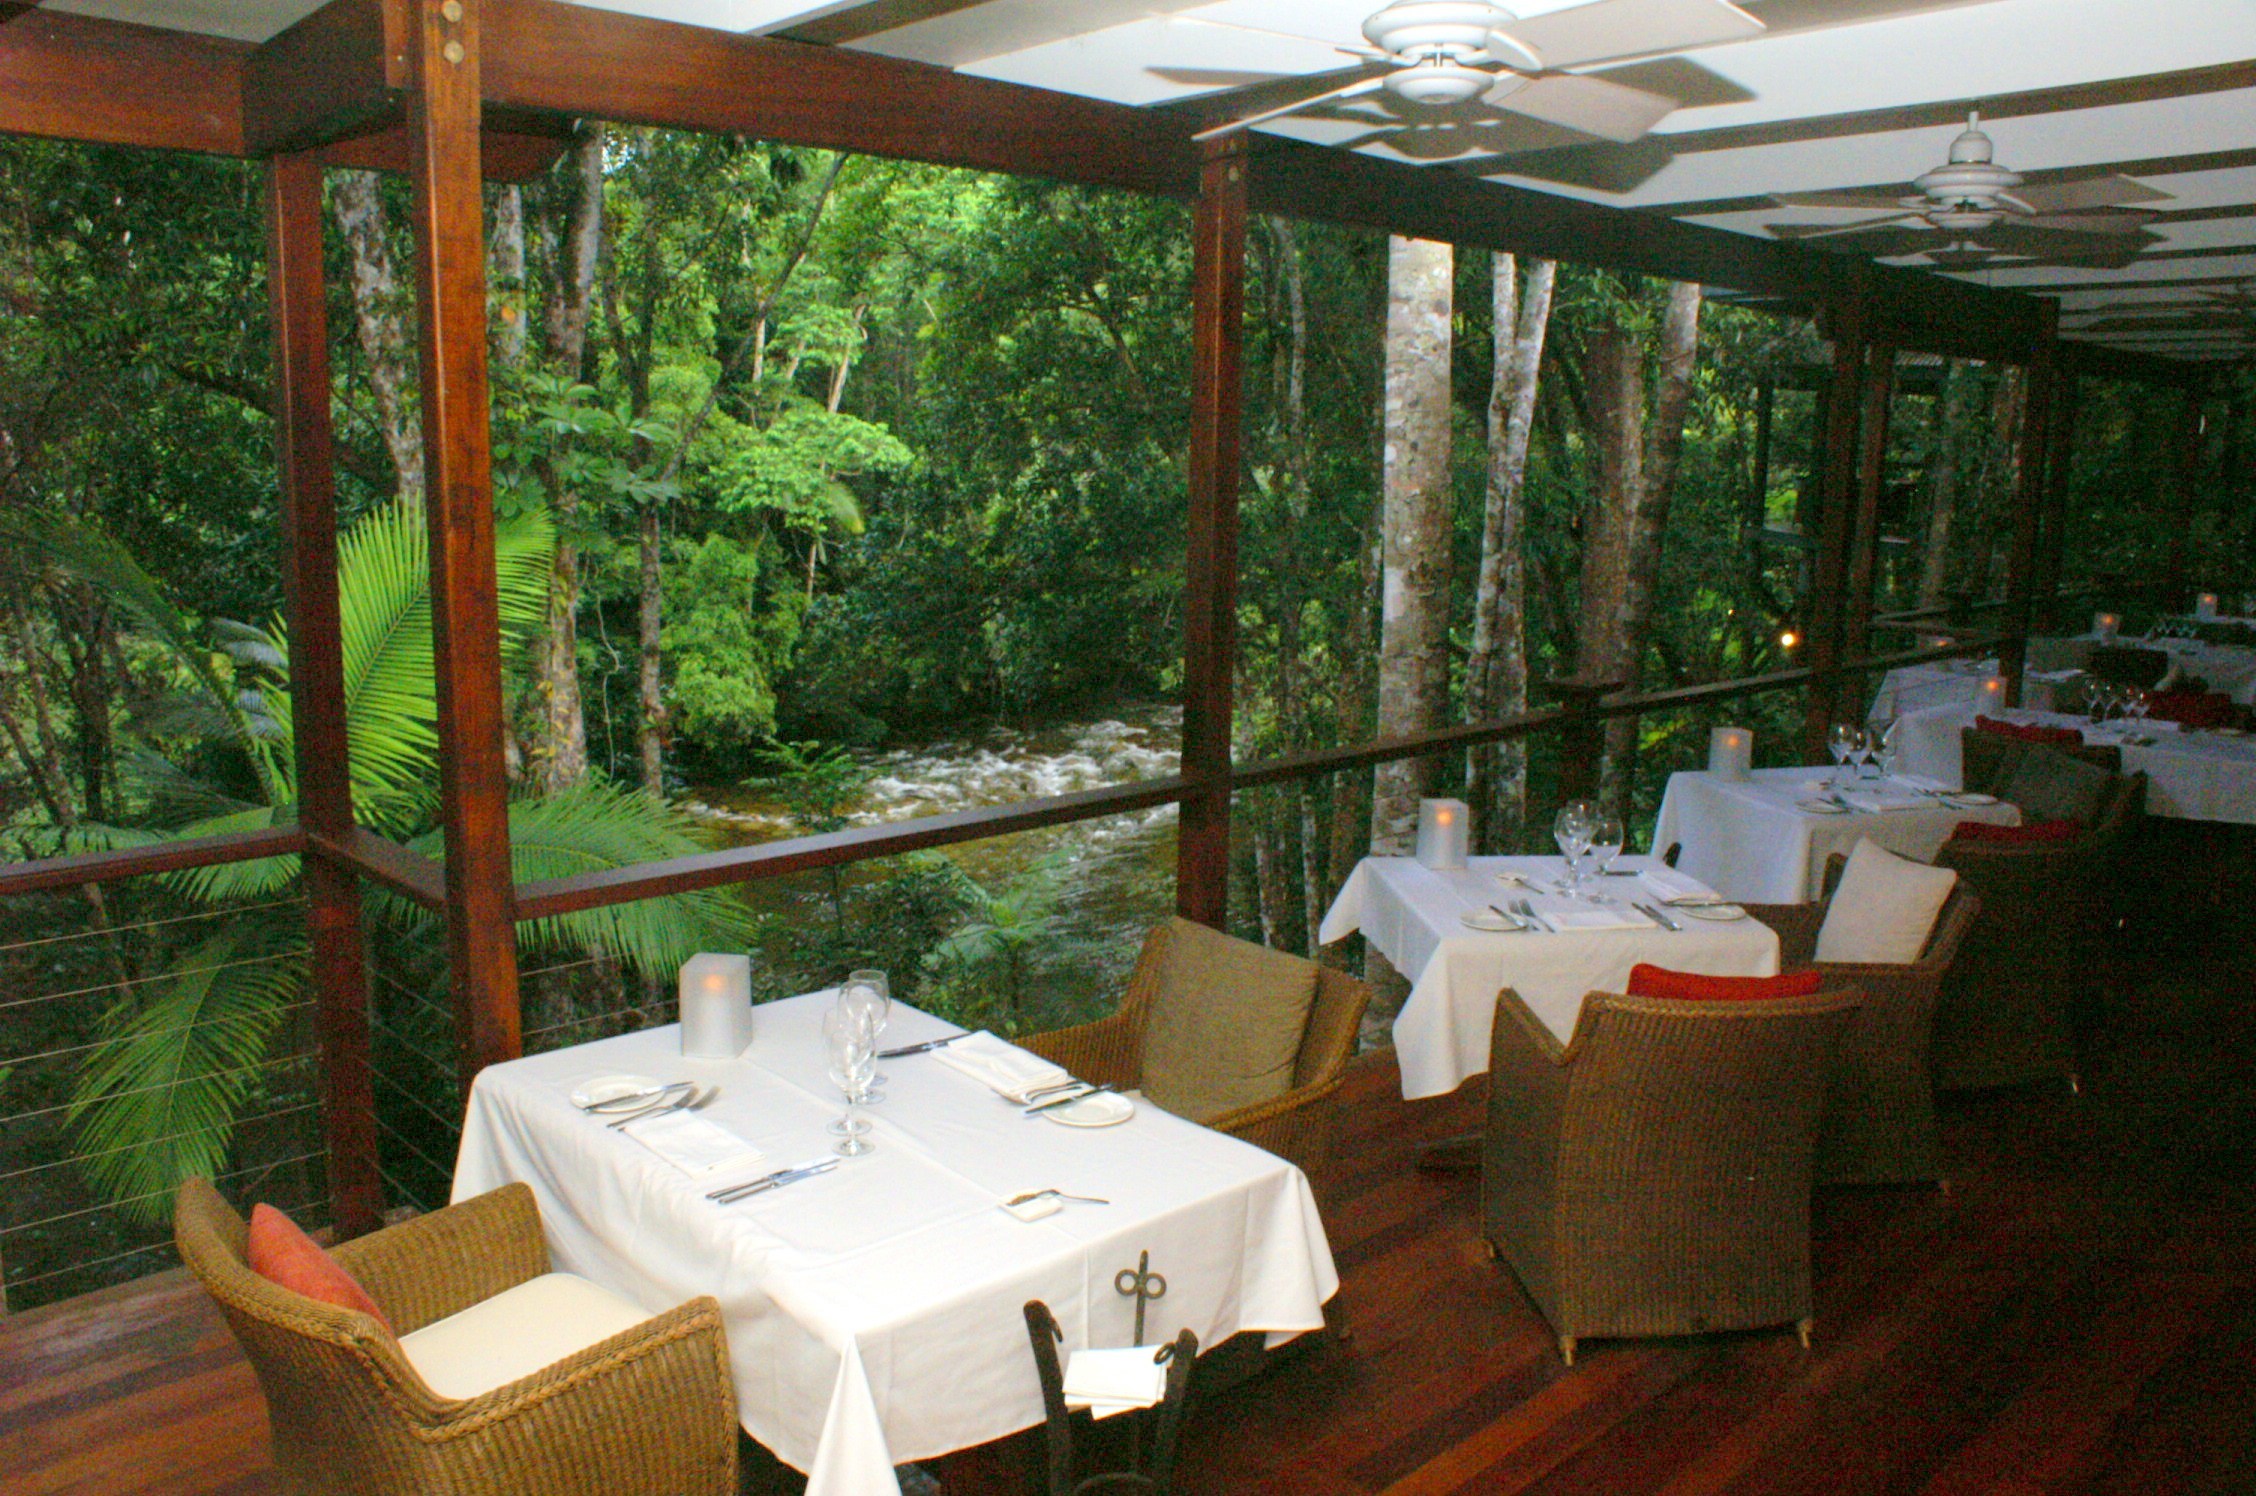 Restaurant offering spectacular view on Mossmann River